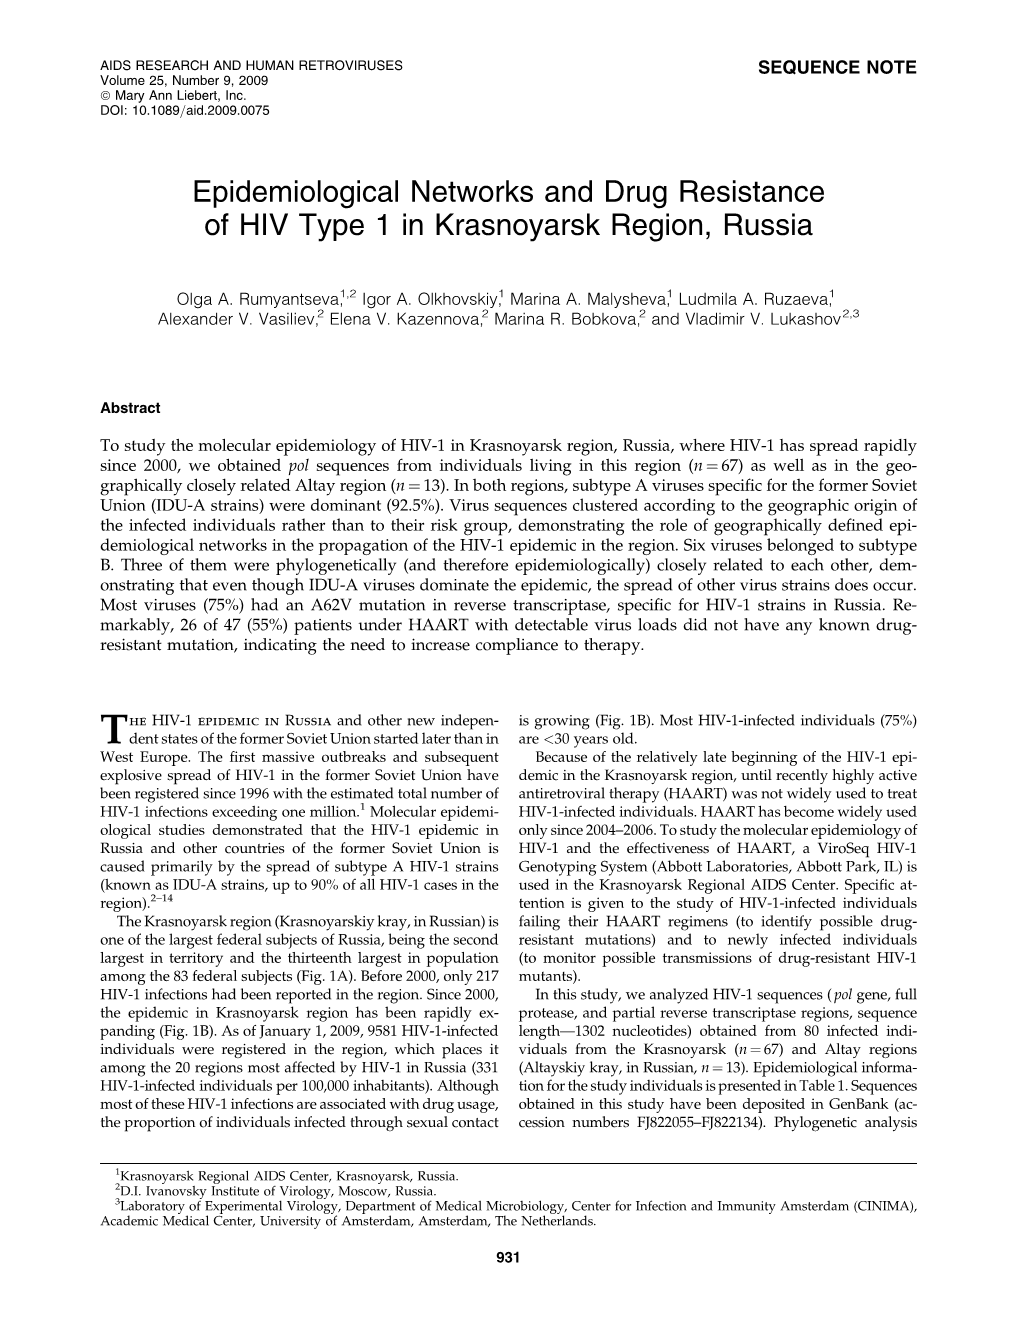 Epidemiological Networks and Drug Resistance of HIV Type 1 in Krasnoyarsk Region, Russia